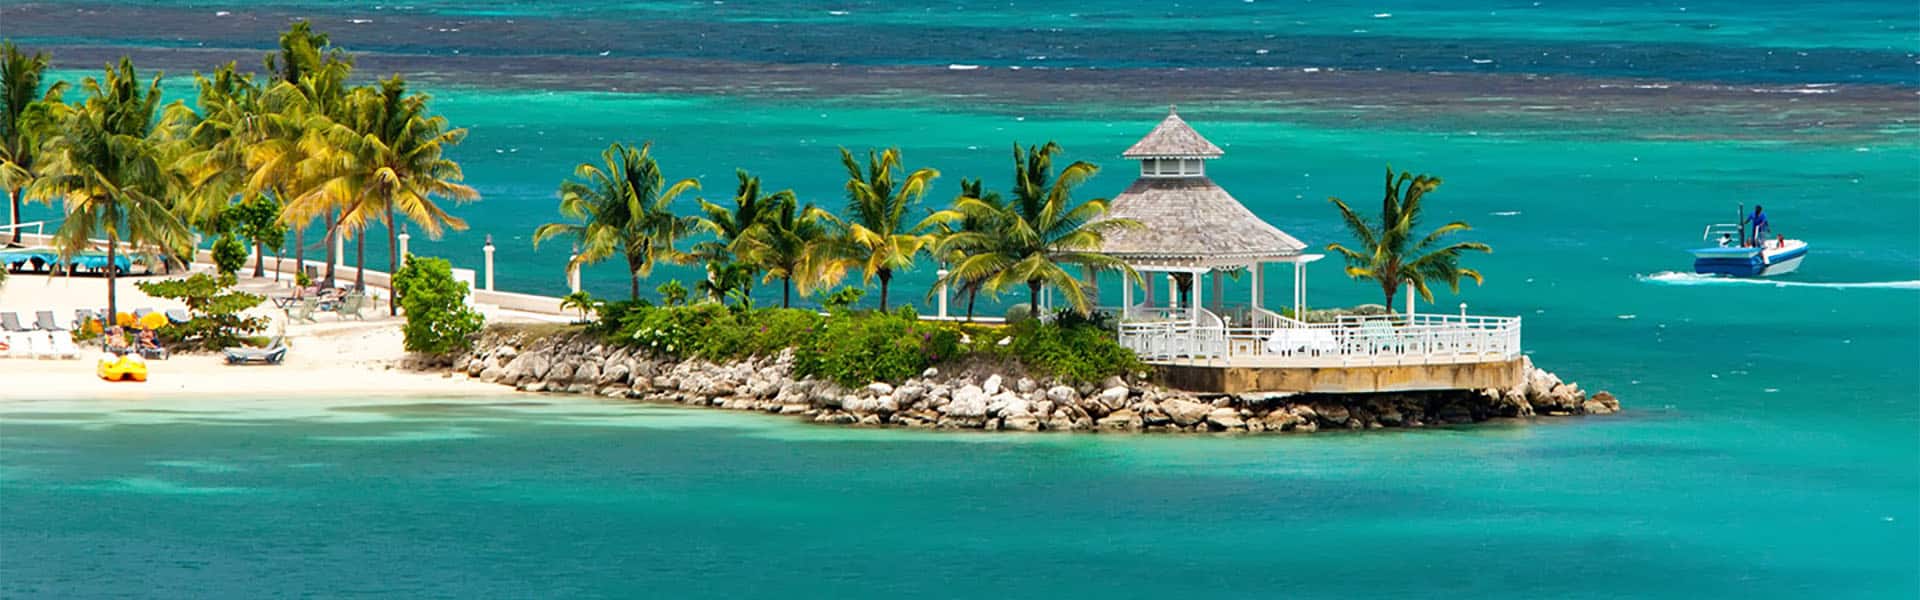 Caribbean: Great Stirrup Cay & Cozumel